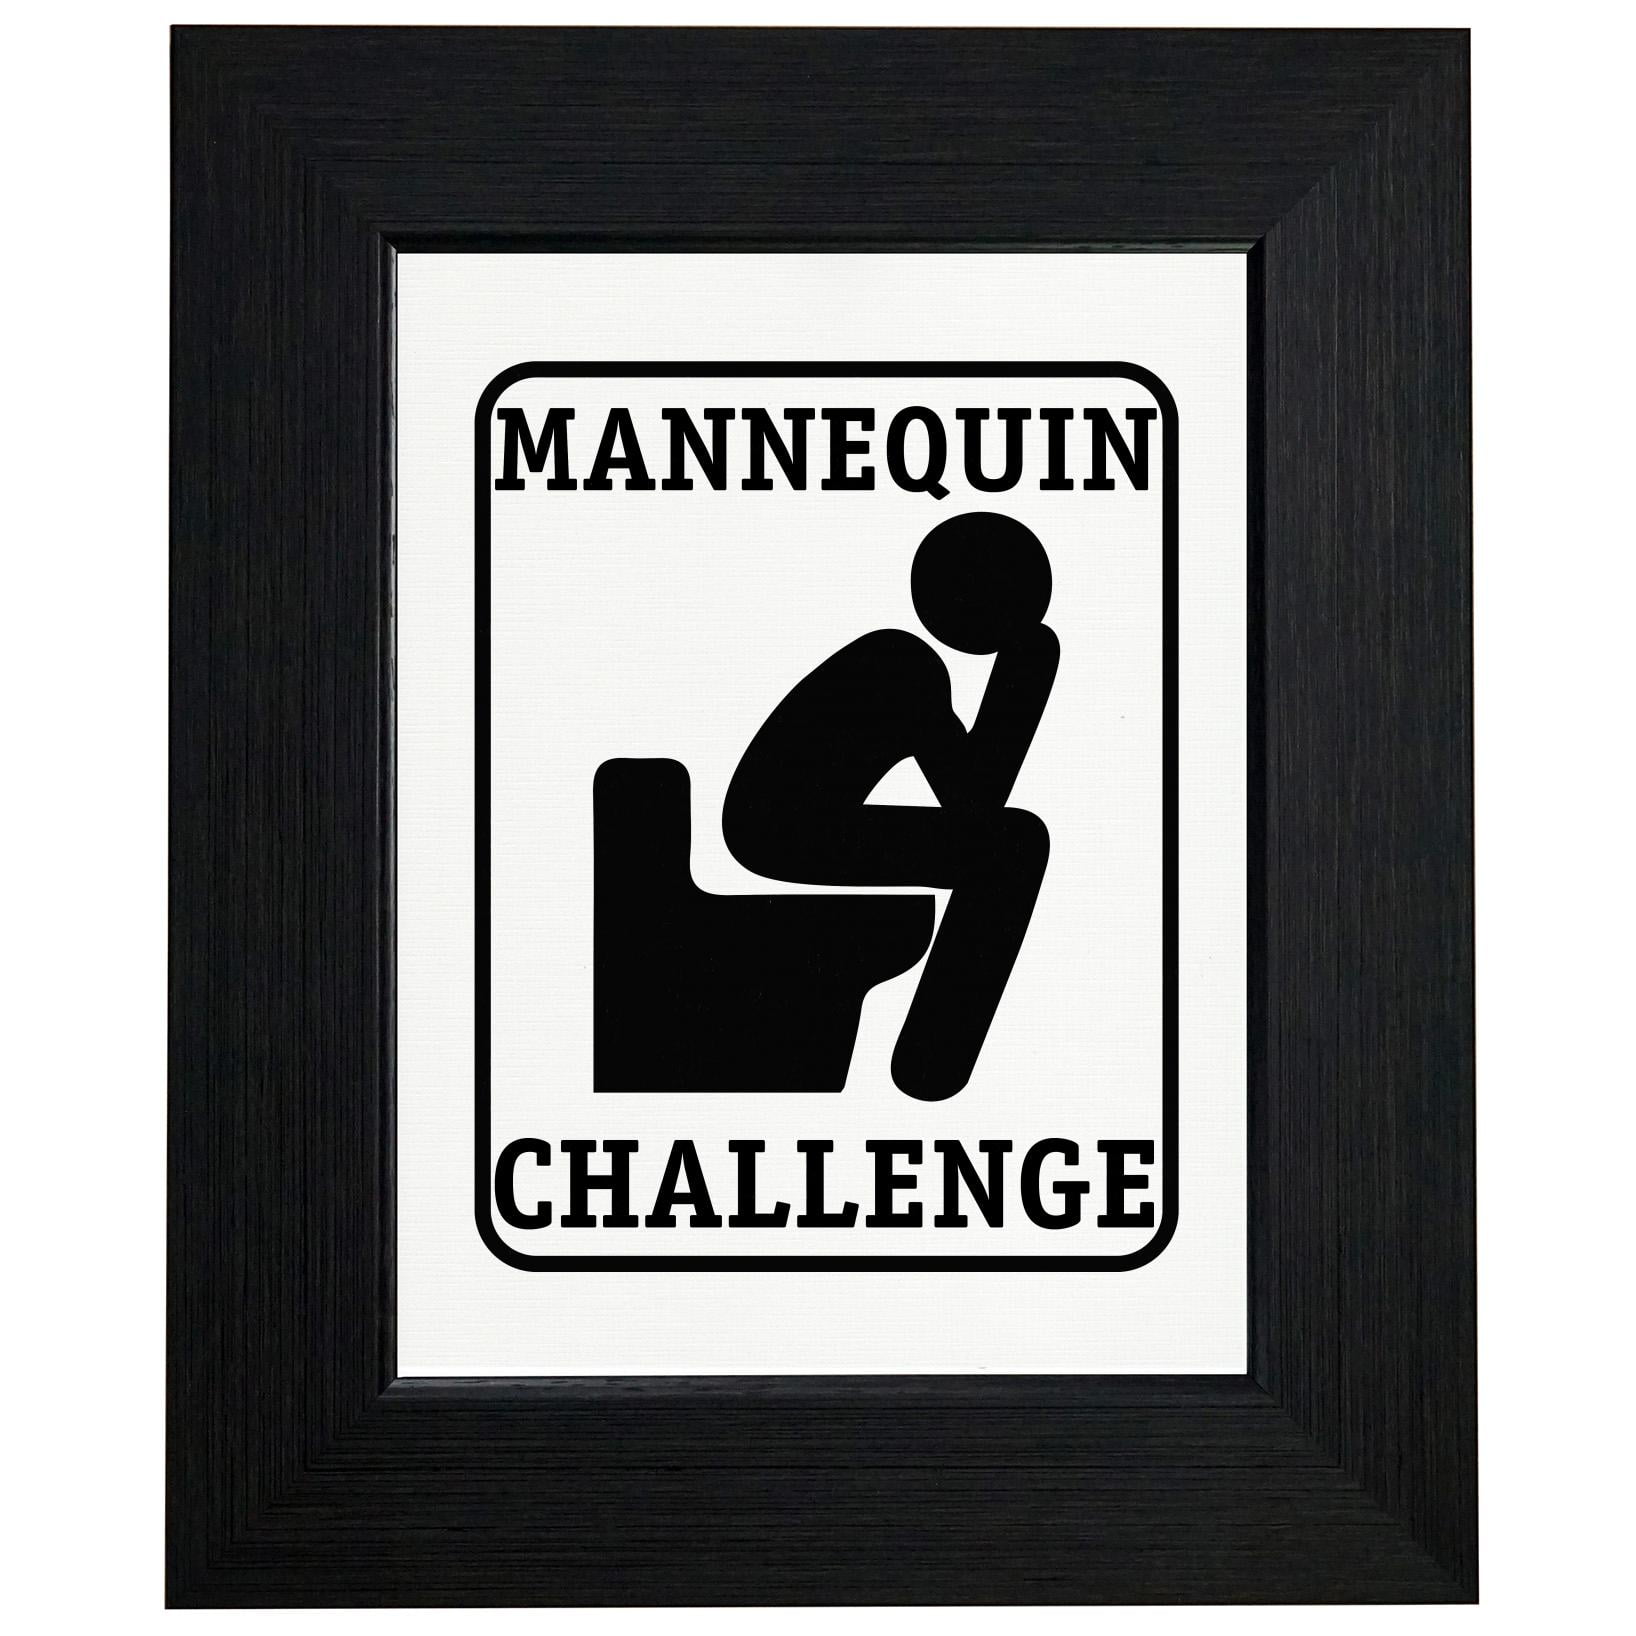 Mannequin Challenge - Sitting on Toilet Stick Figure Framed Print Poster  Wall or Desk Mount Options 